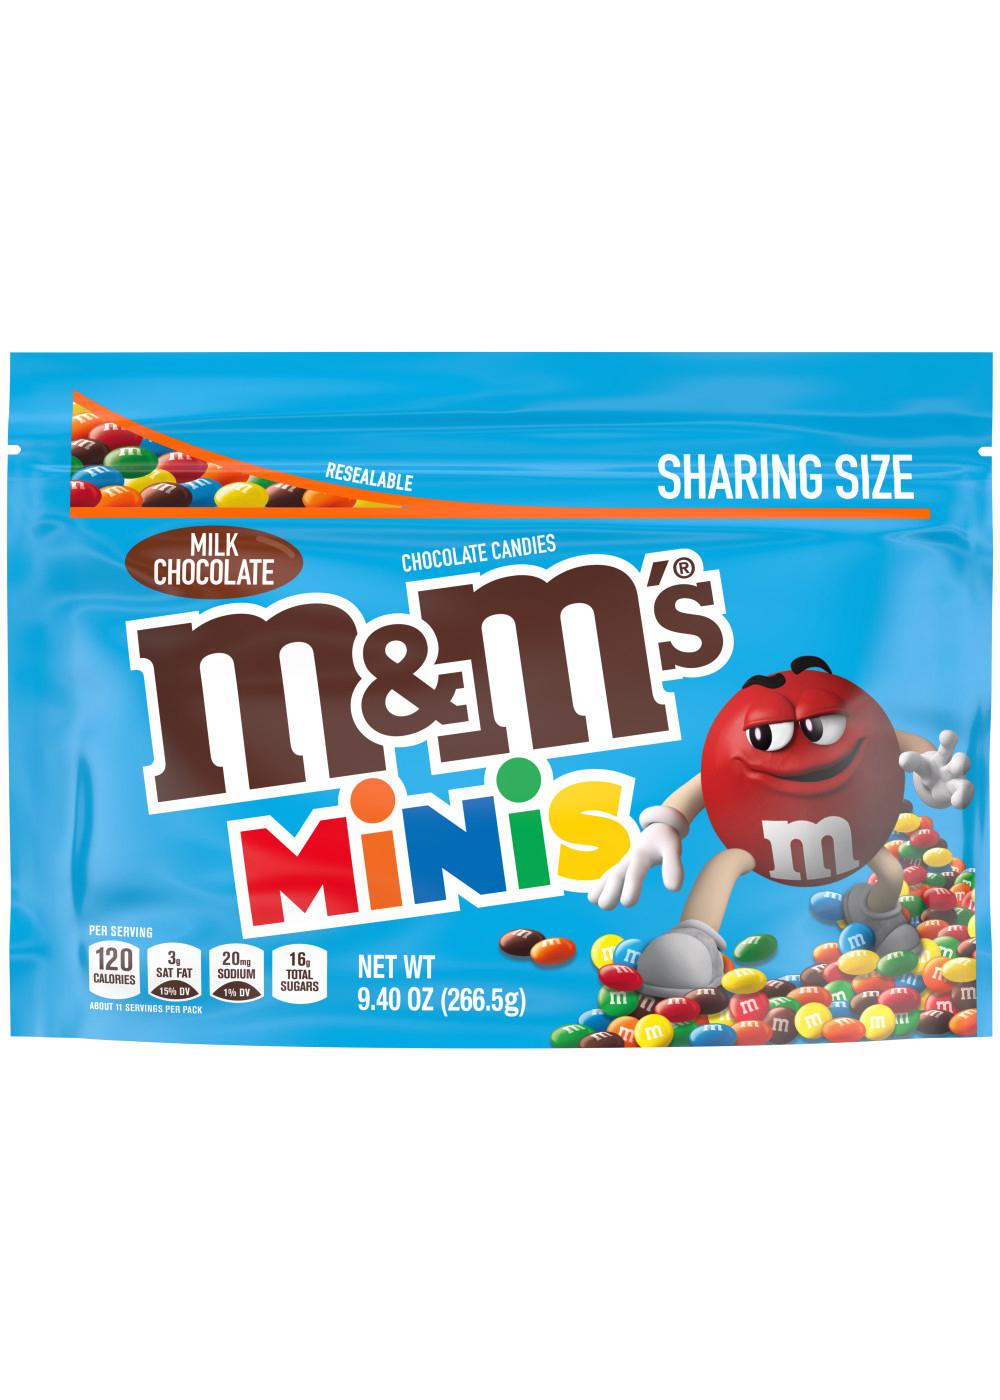 M&M's Mini Milk Chocolate Candies Sharing Size 10.10oz : Snacks